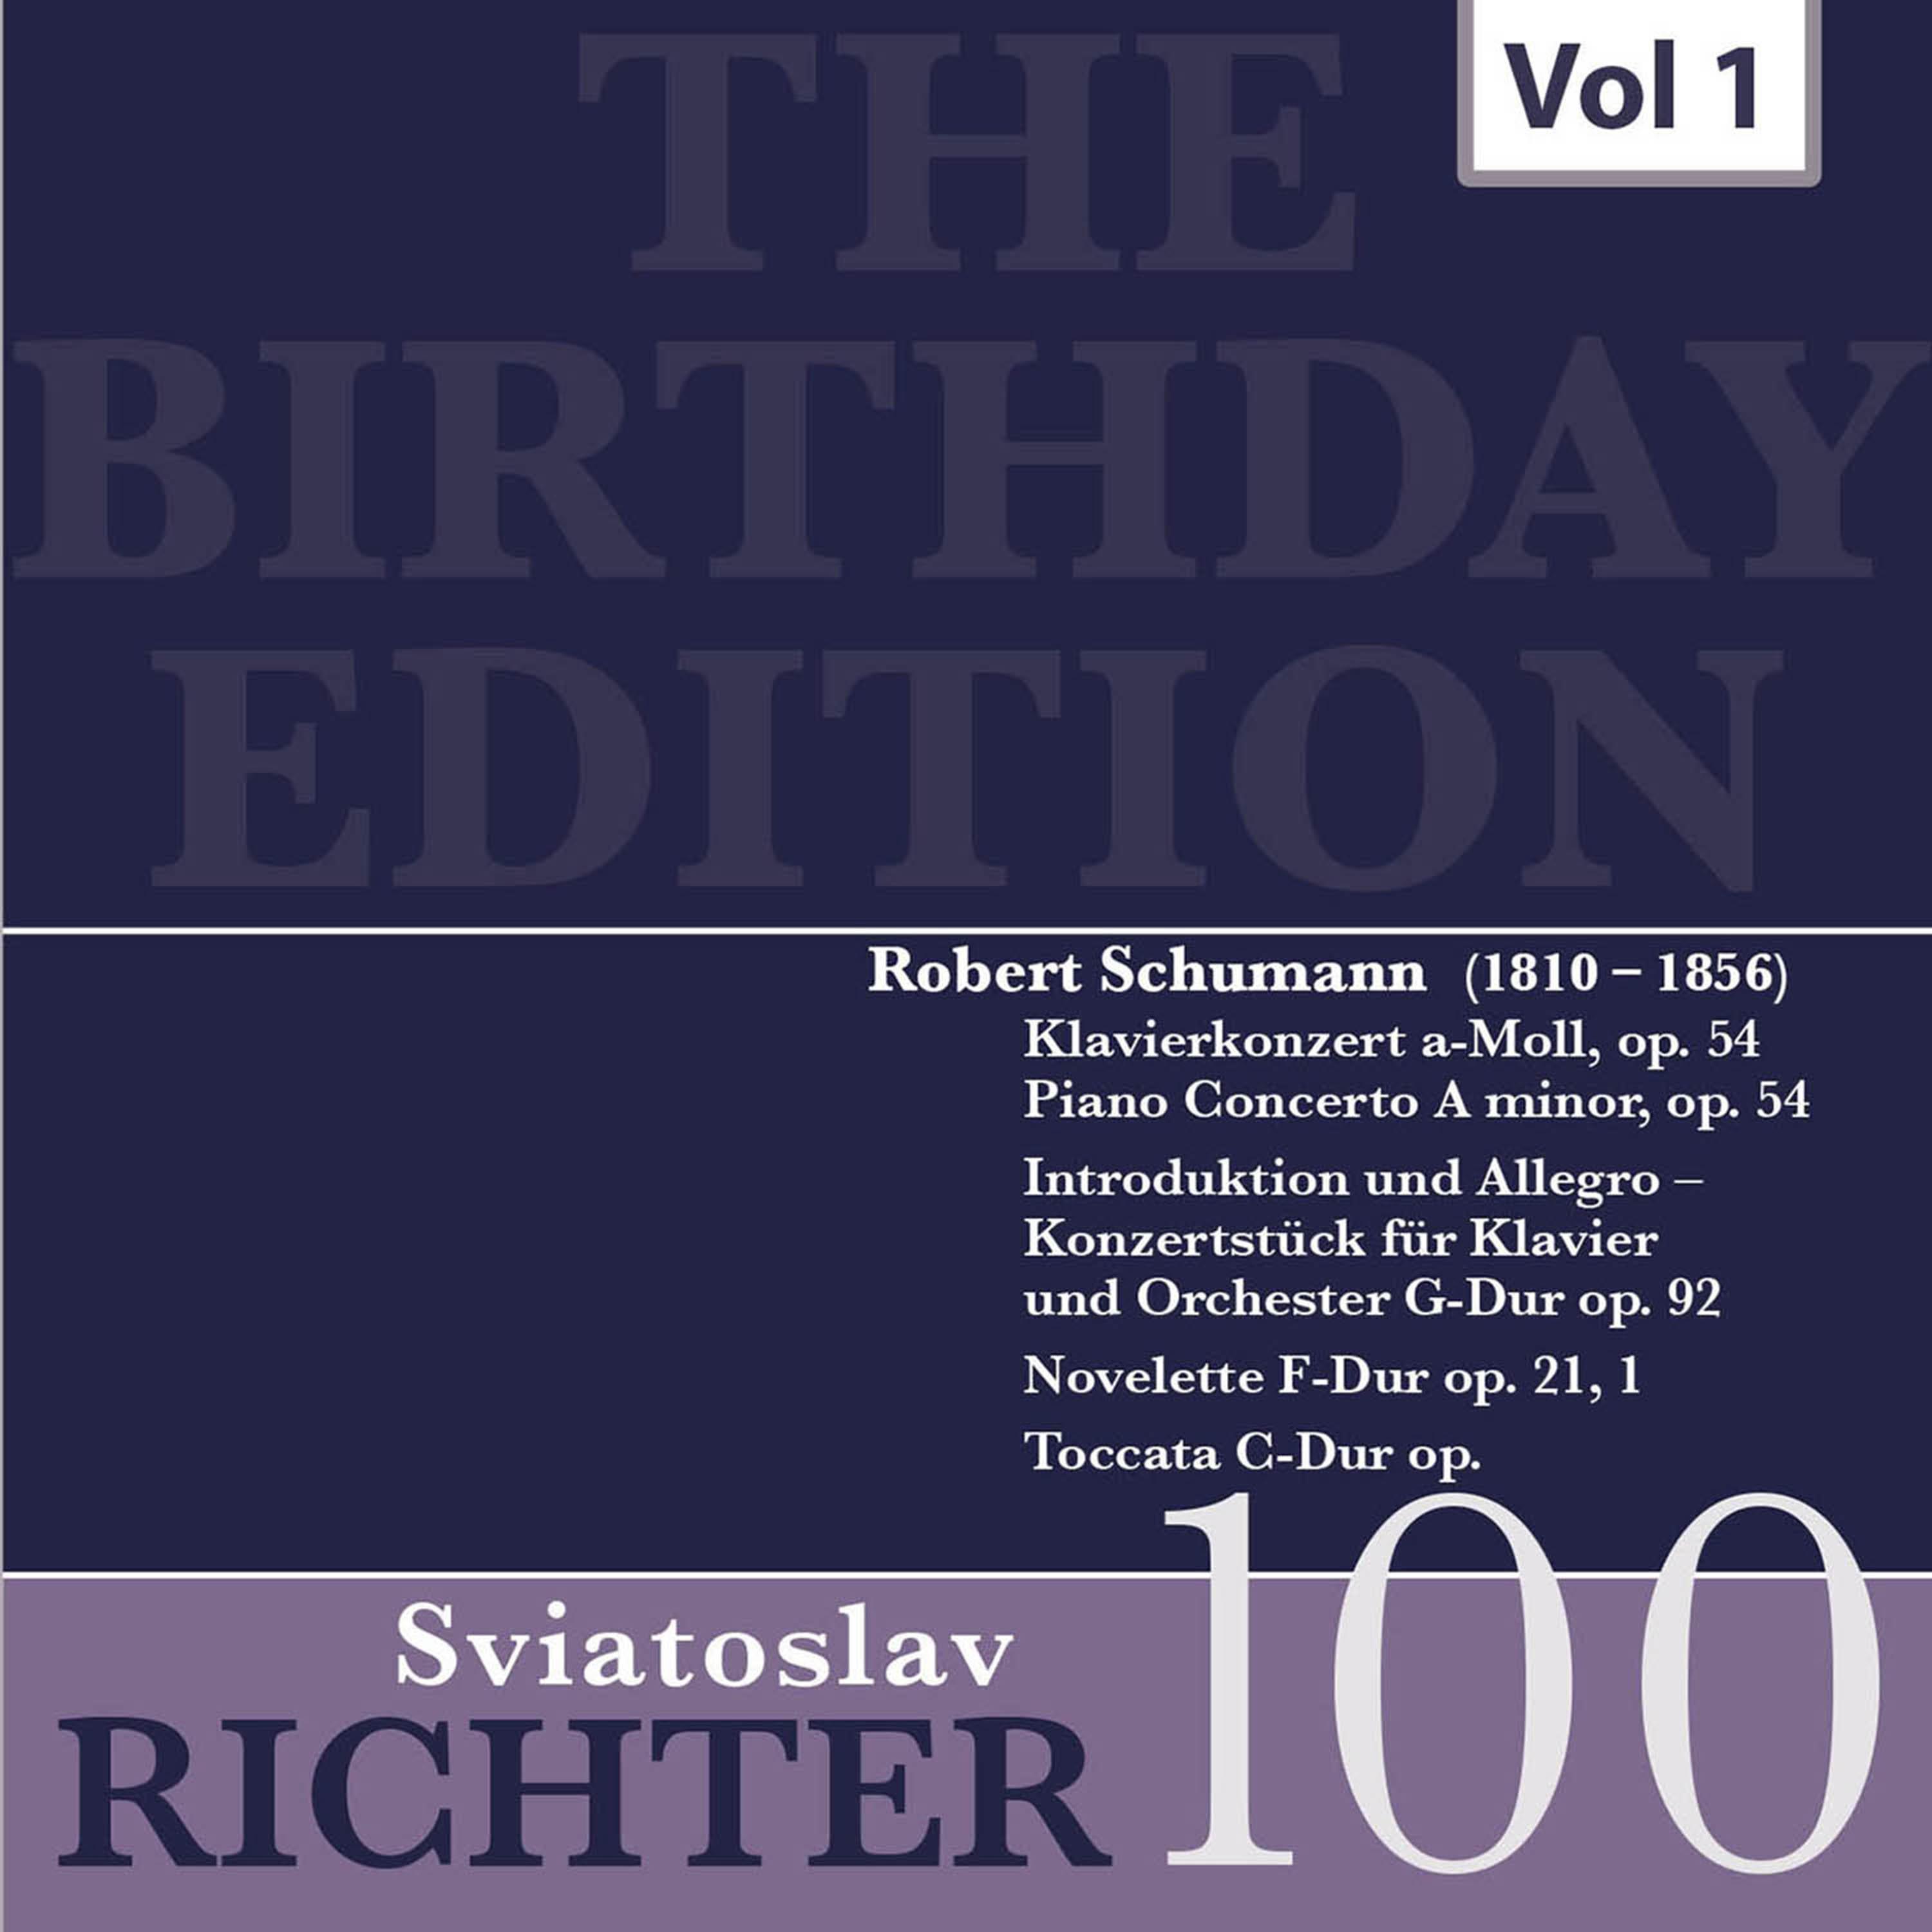 The Birthday Edition - Sviatoslav Richter, Vol. 1